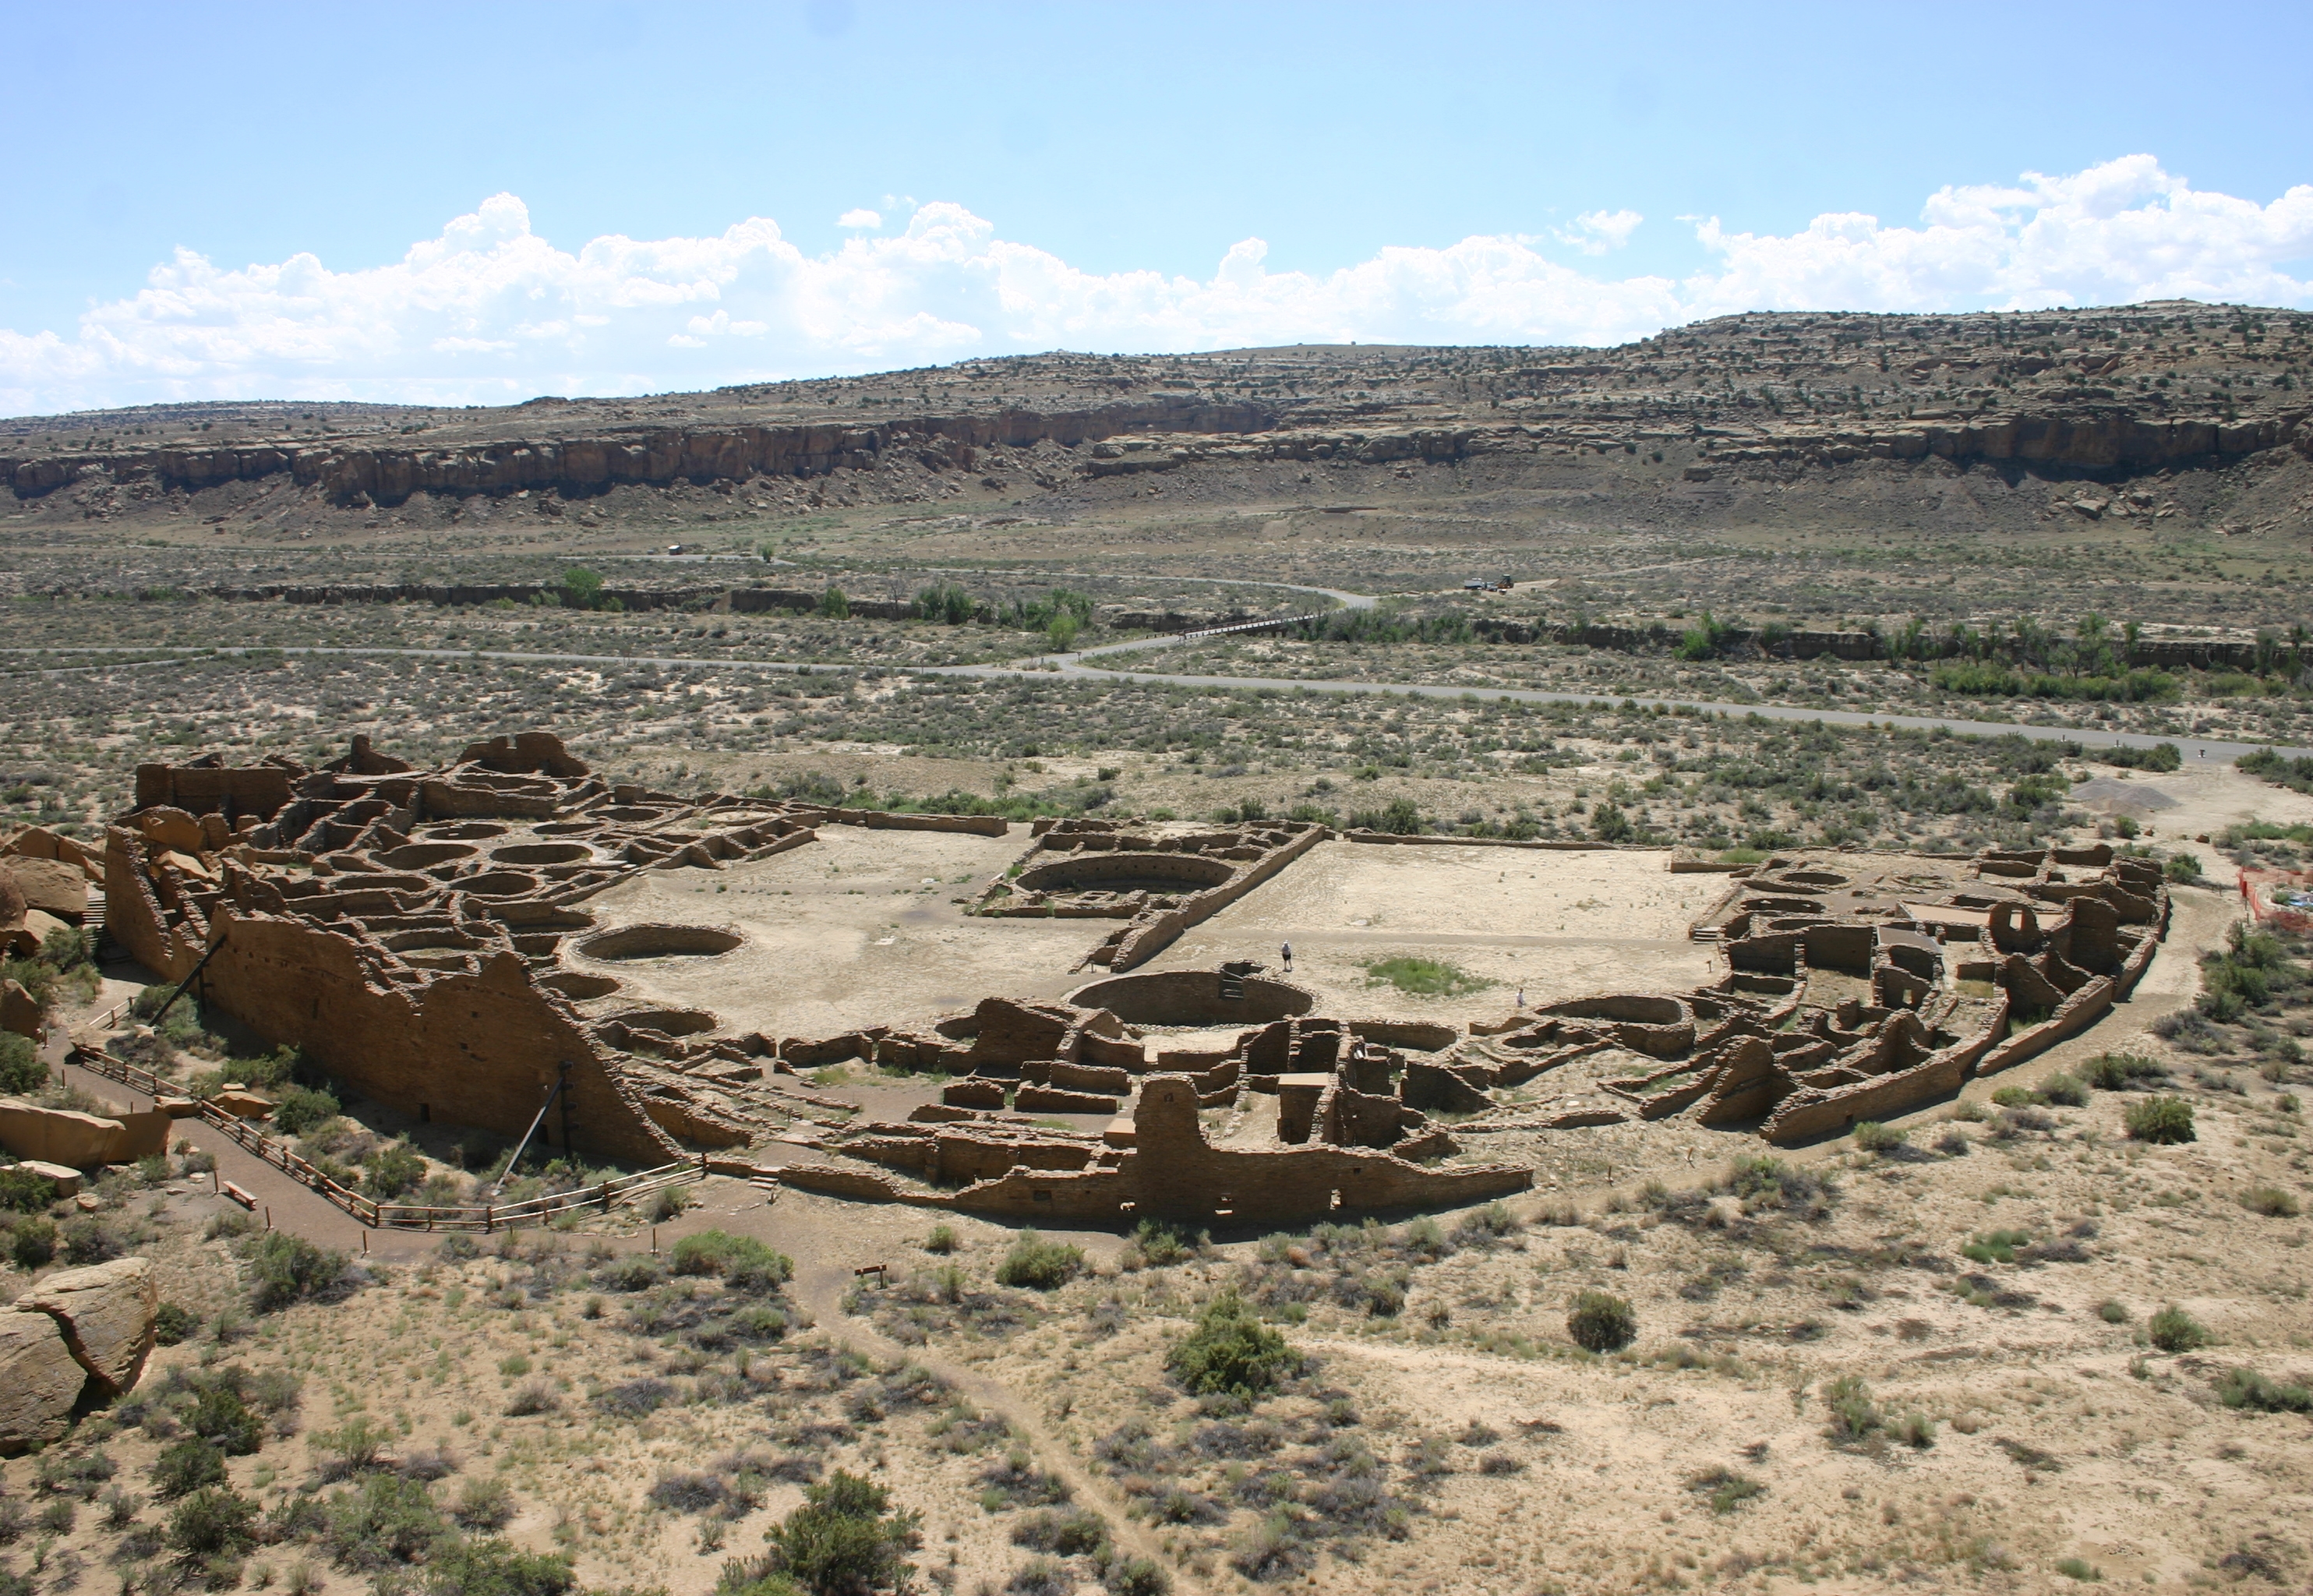 Ancient ruins in a desert environment